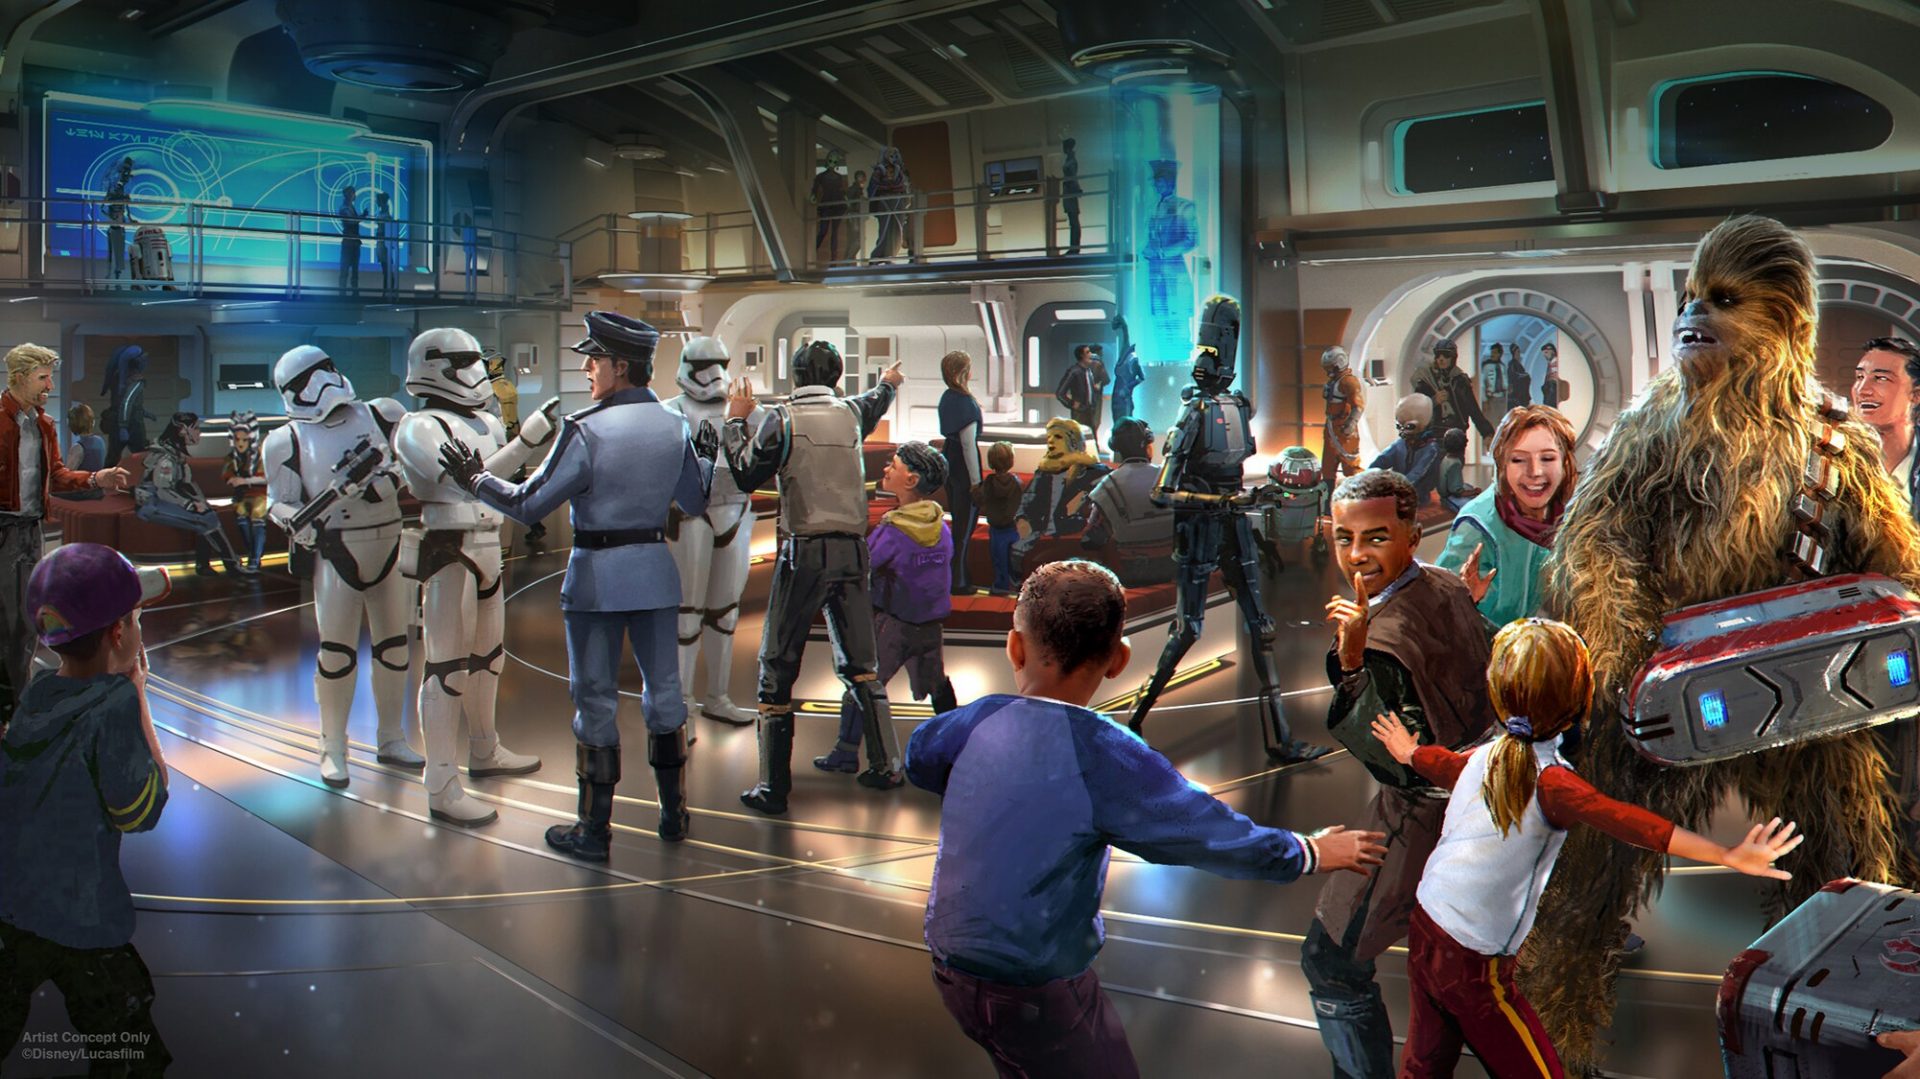 Star Wars: Galactic Starcruiser hotel opens in 2022 at Walt Disney